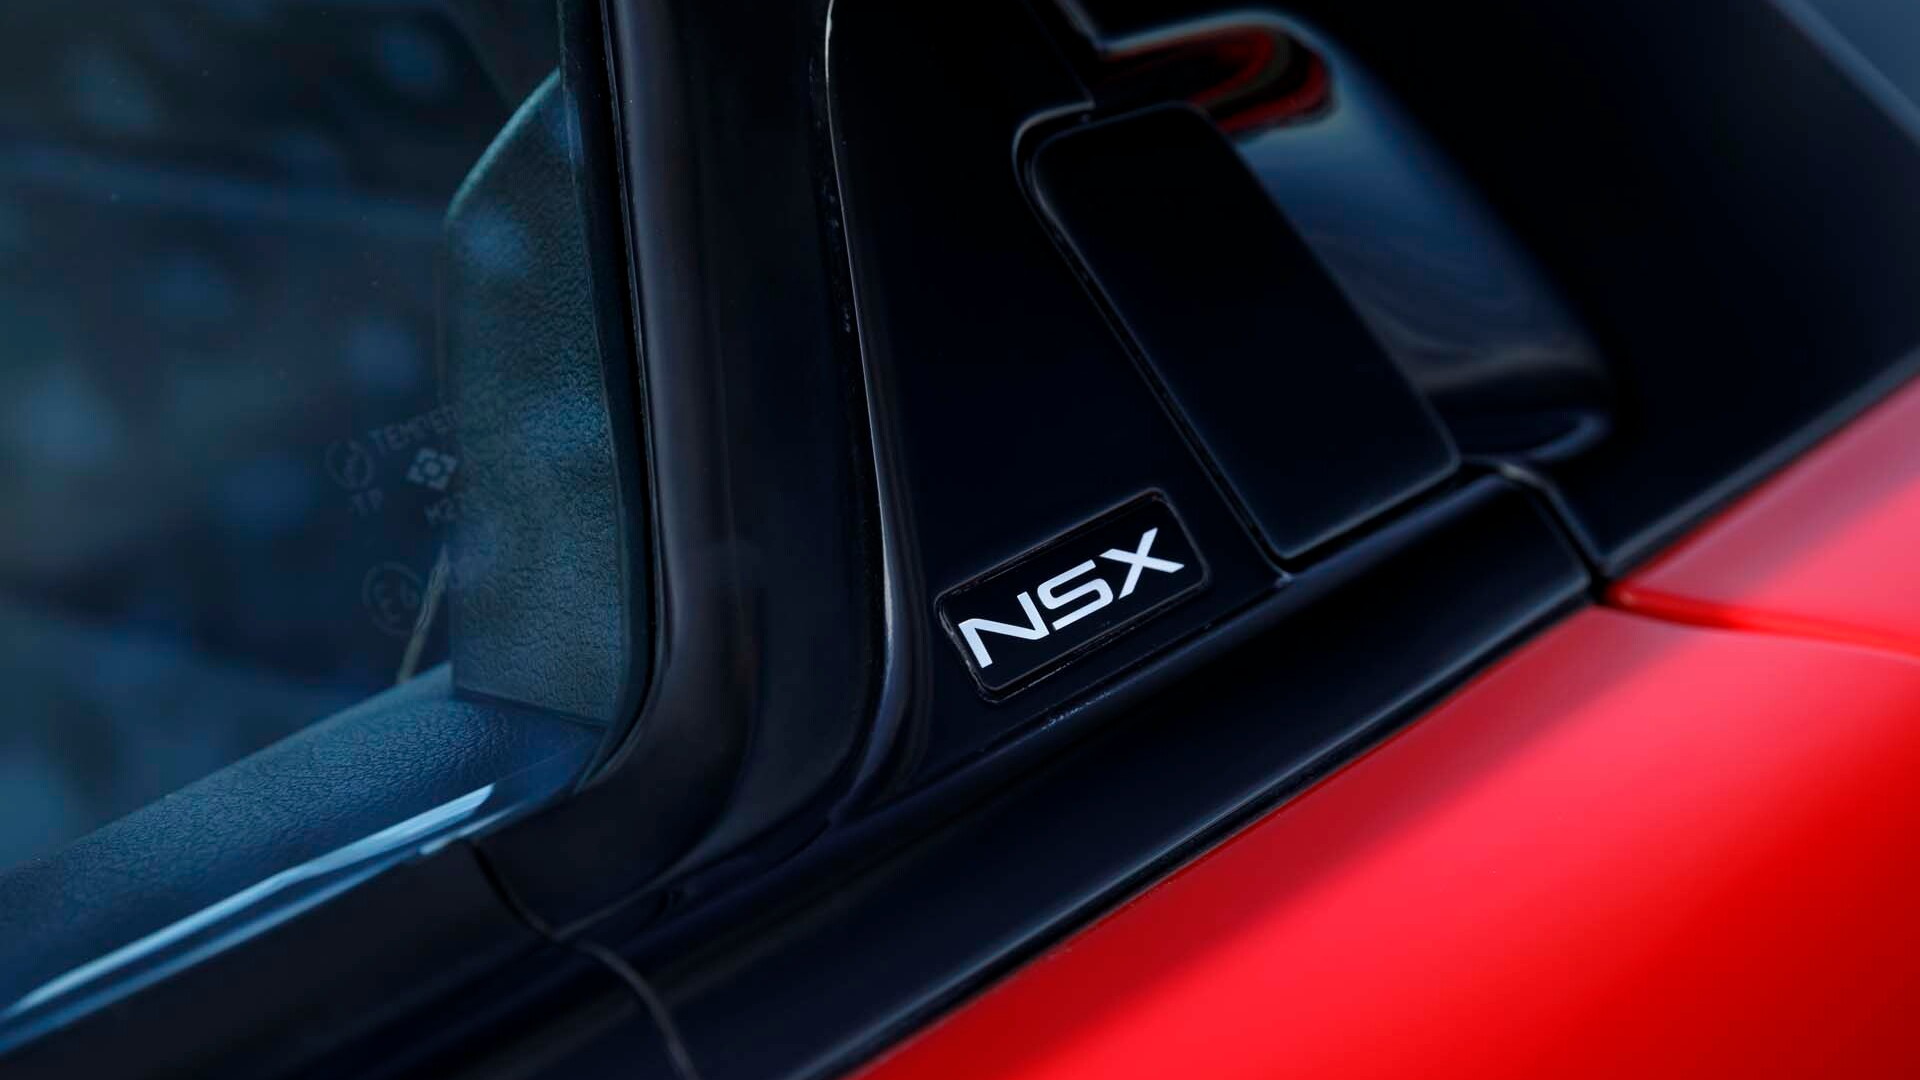 1991 Acura NSX and 2019 Acura NSX - Acura NSX 30th Anniversary